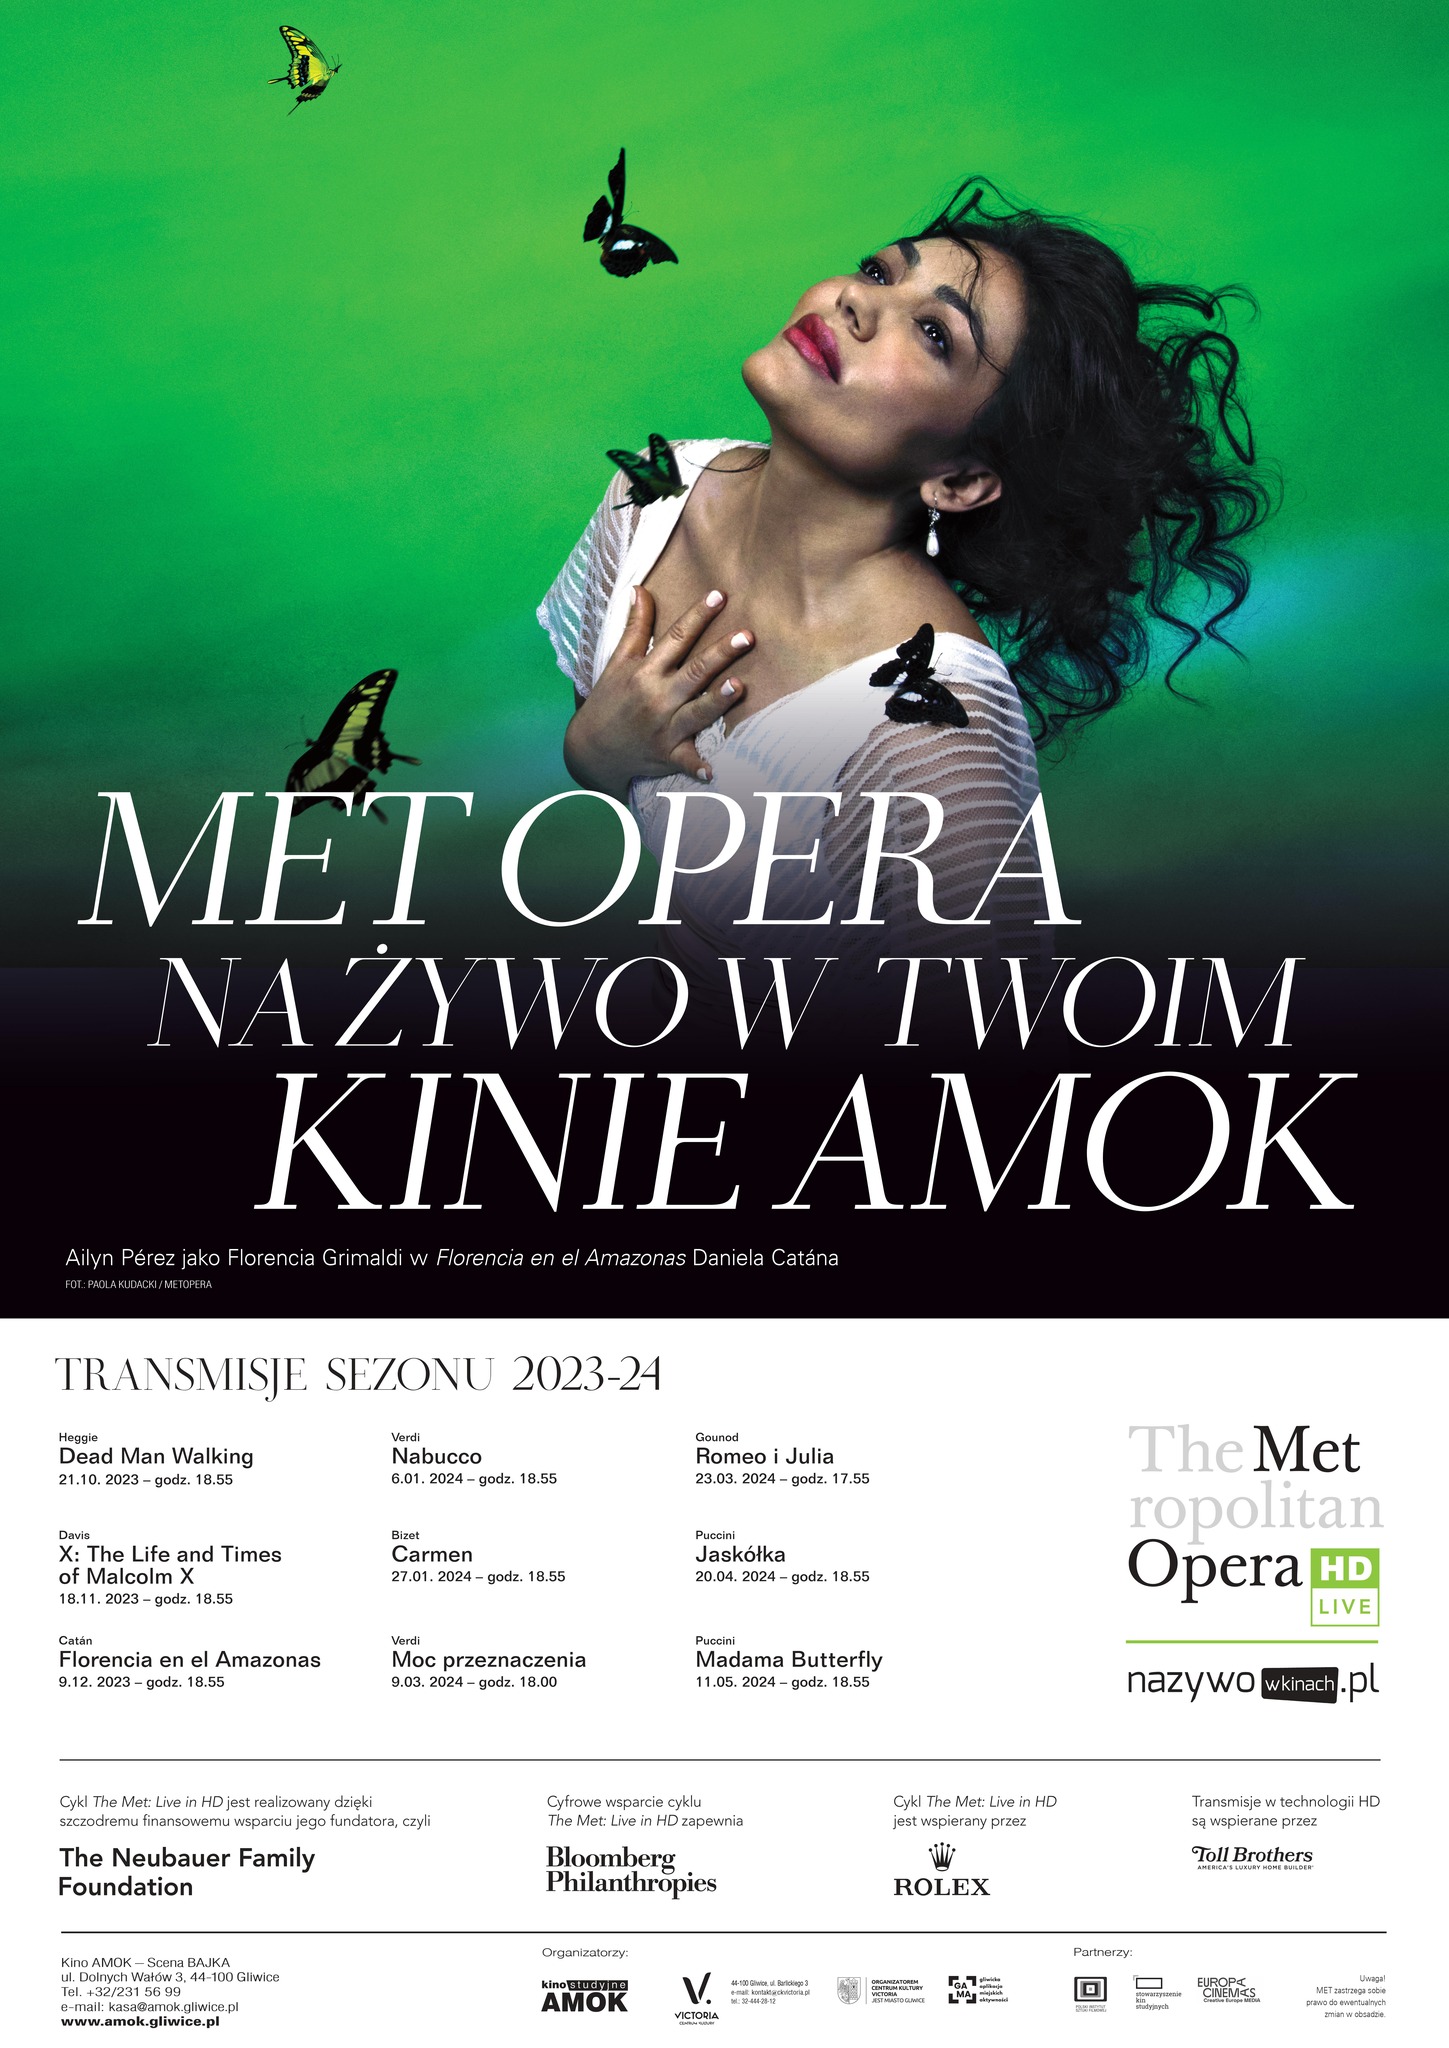 Plakat promujący nowy sezon transmisji MET Opera